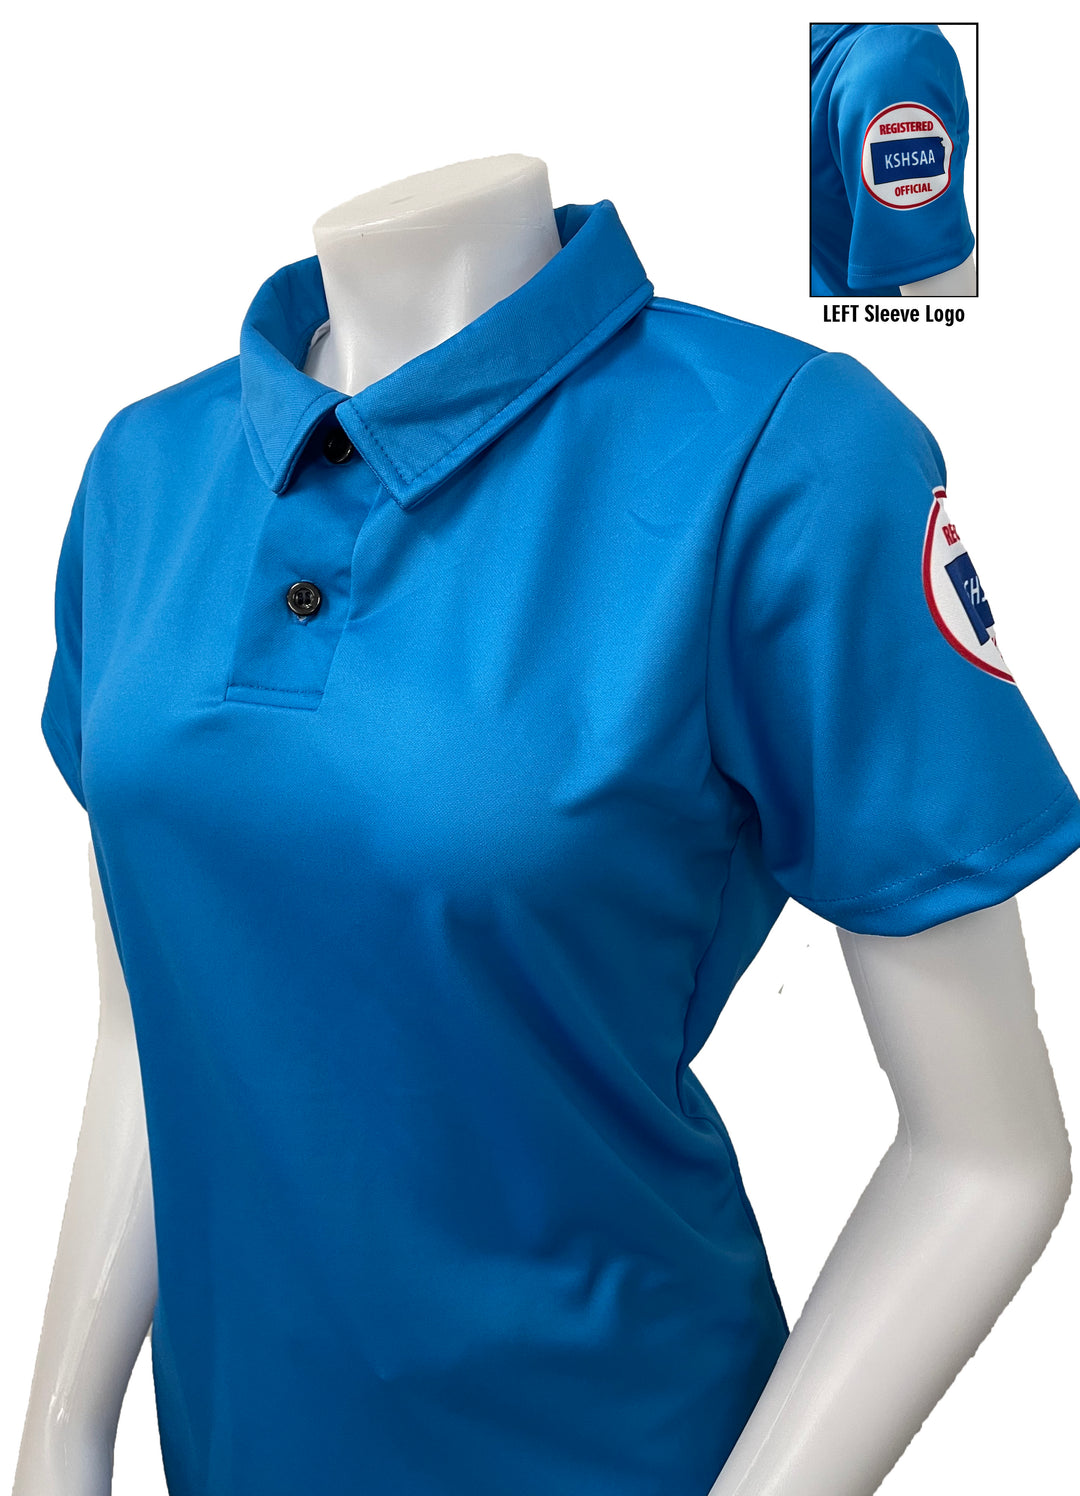 USA402KS-BB - Smitty "Made in USA" - BRIGHT BLUE - Volleyball Women's Short Sleeve Shirt